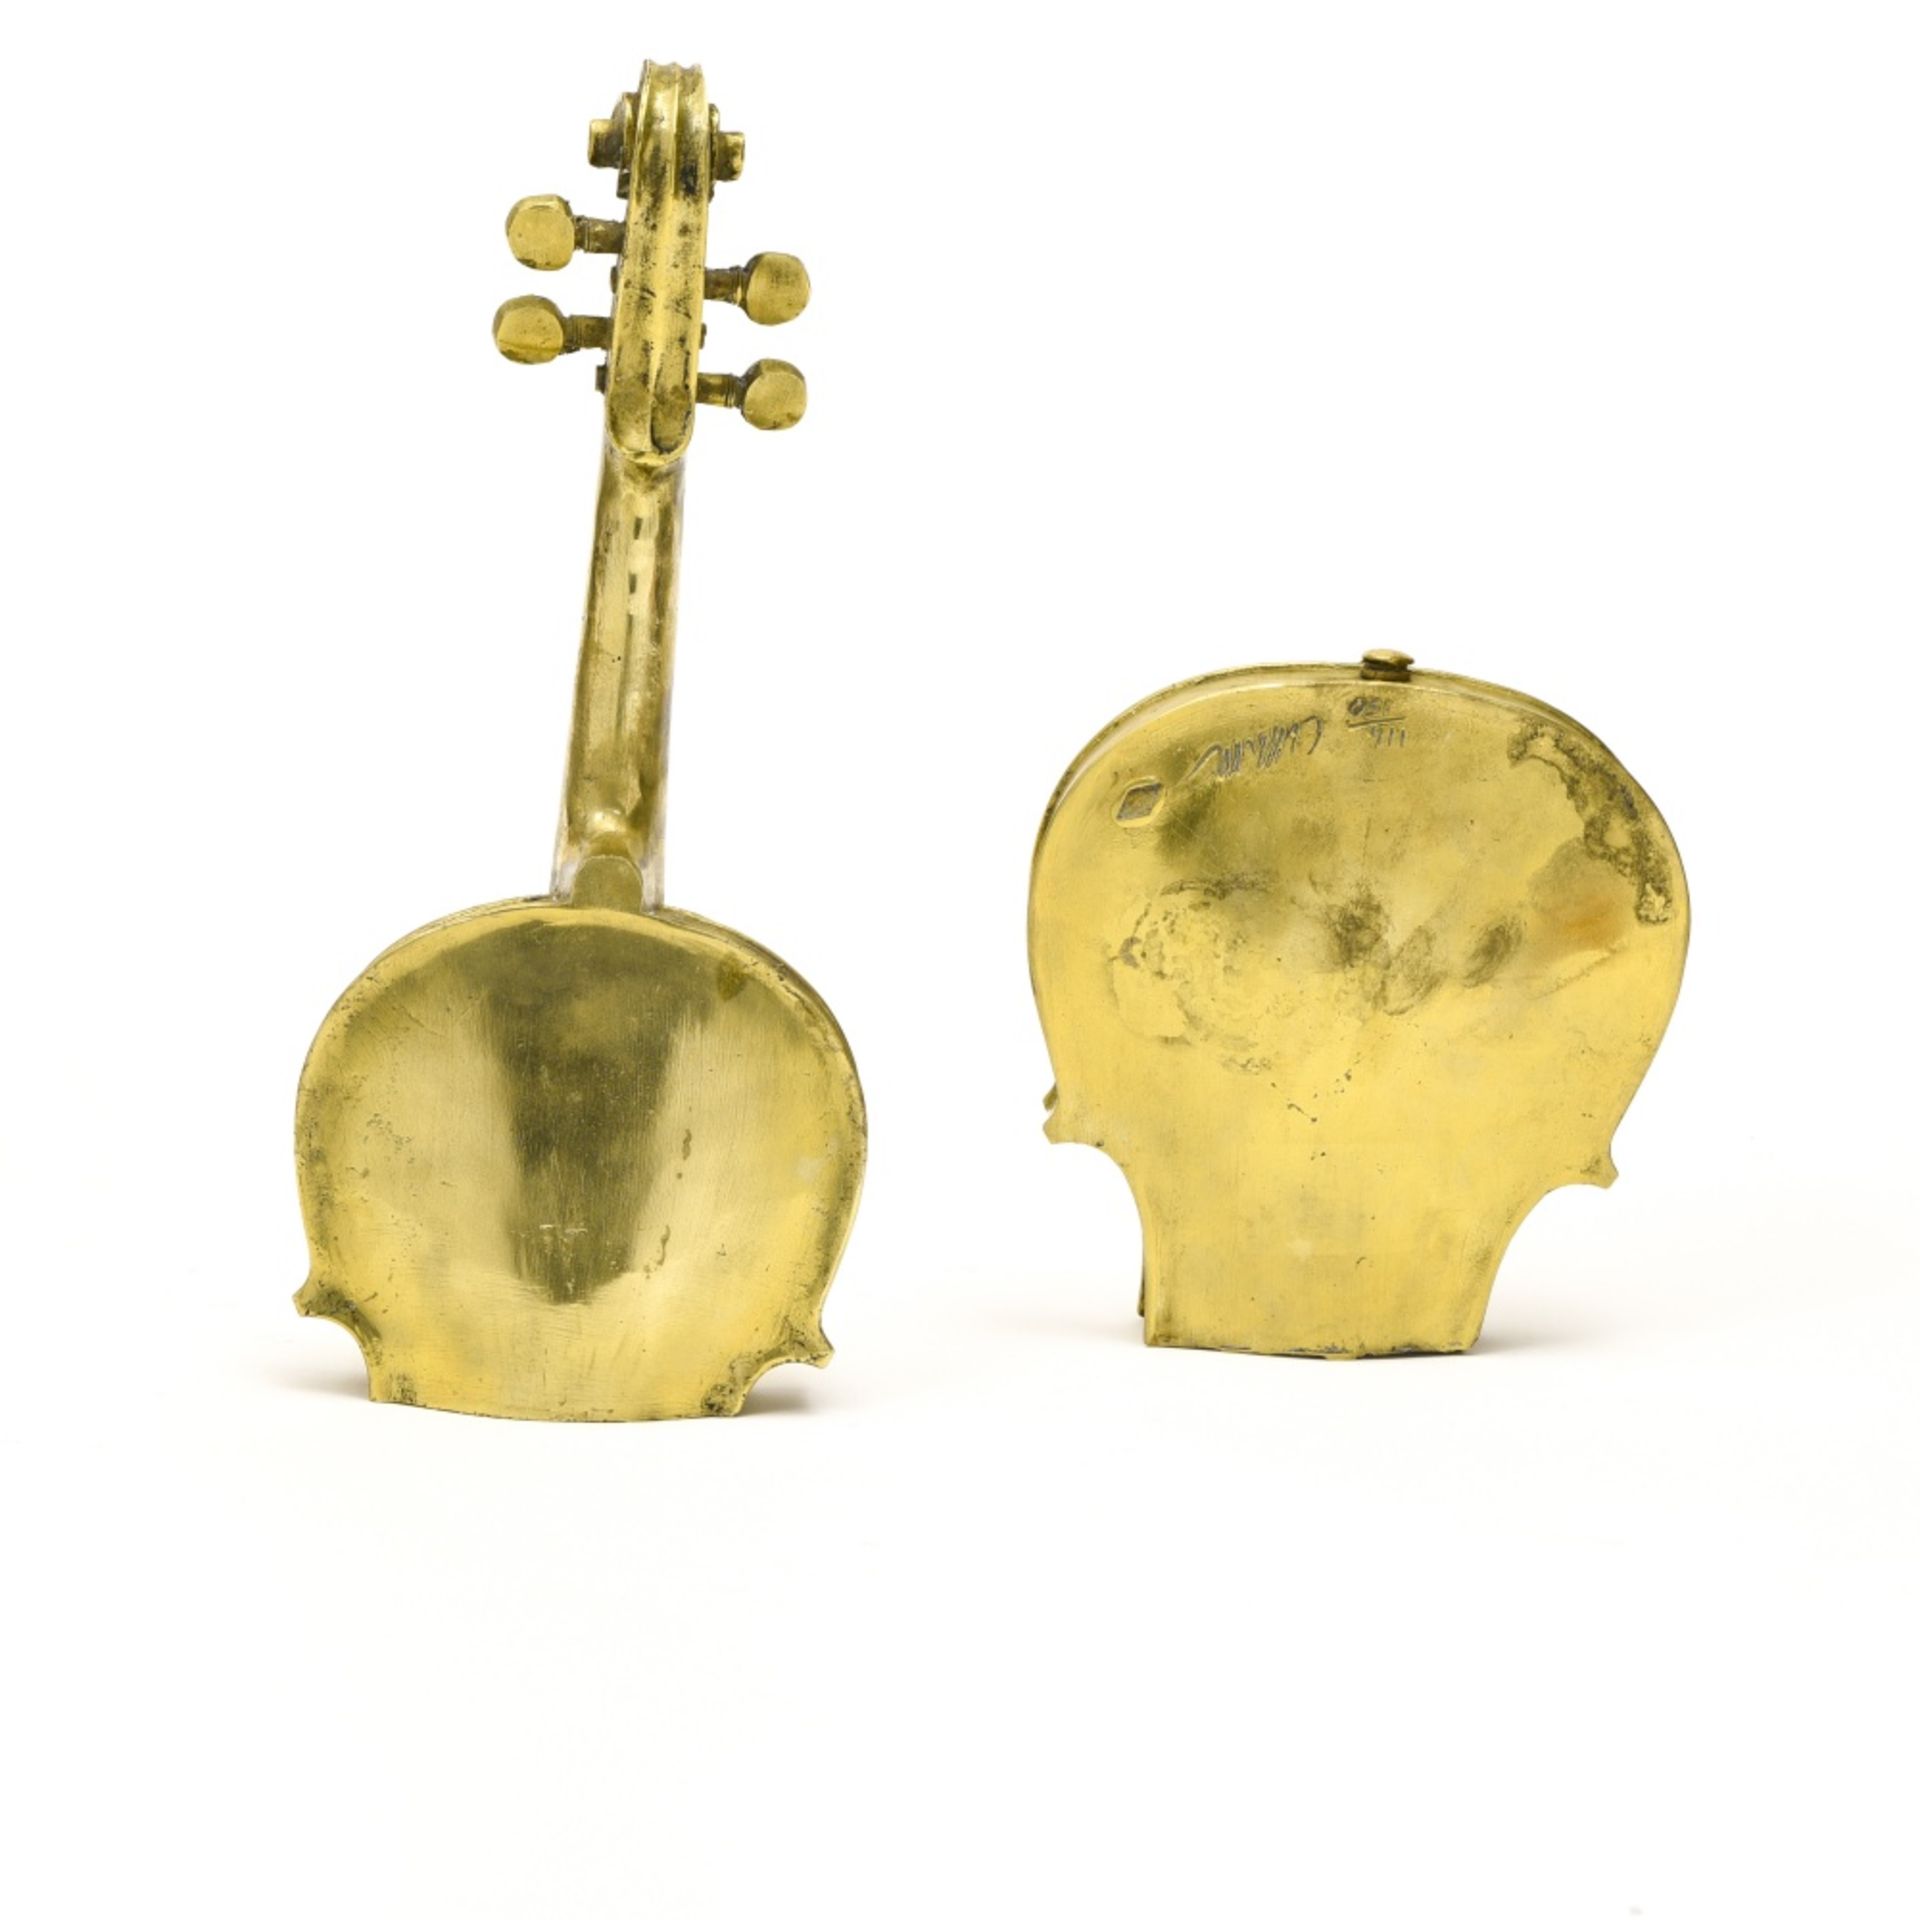 ARMAN (1928-2005) Halved violin, 1972, Polished gilt bronze sculpture, numbered 114/150 with - Image 2 of 3